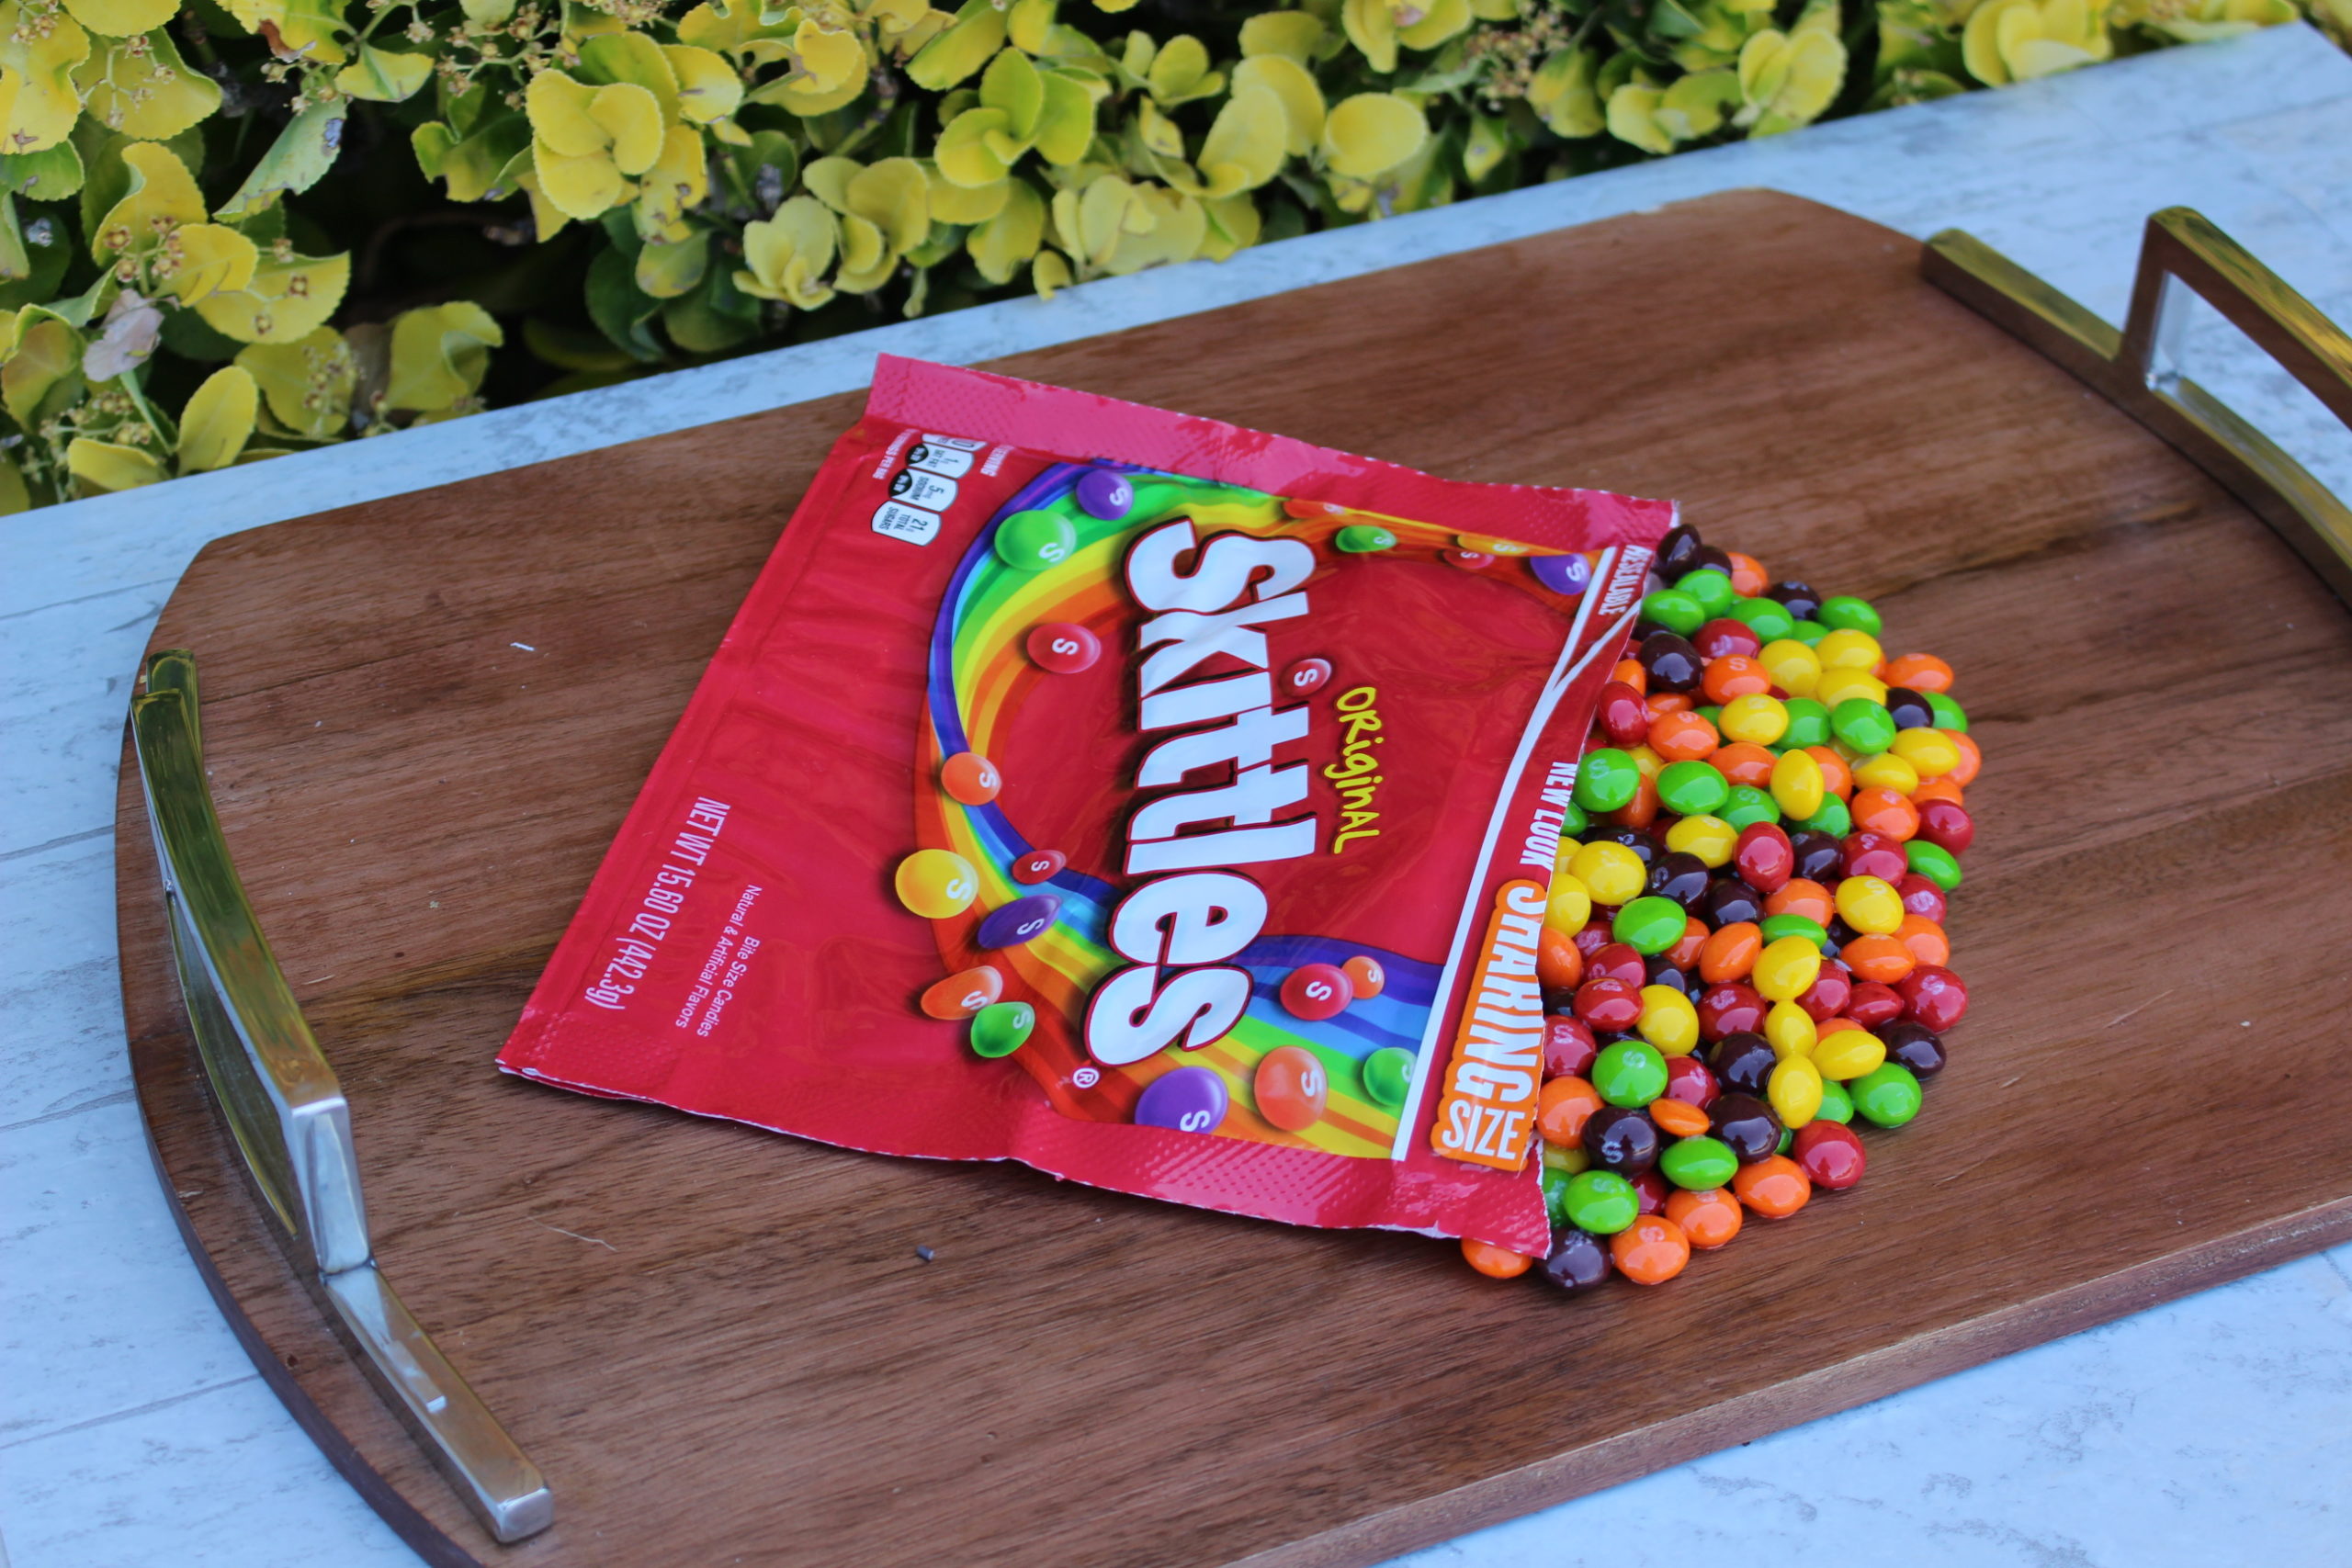 Skittles Original Candy, 7.2 ounce bag (1-Bag) | eBay